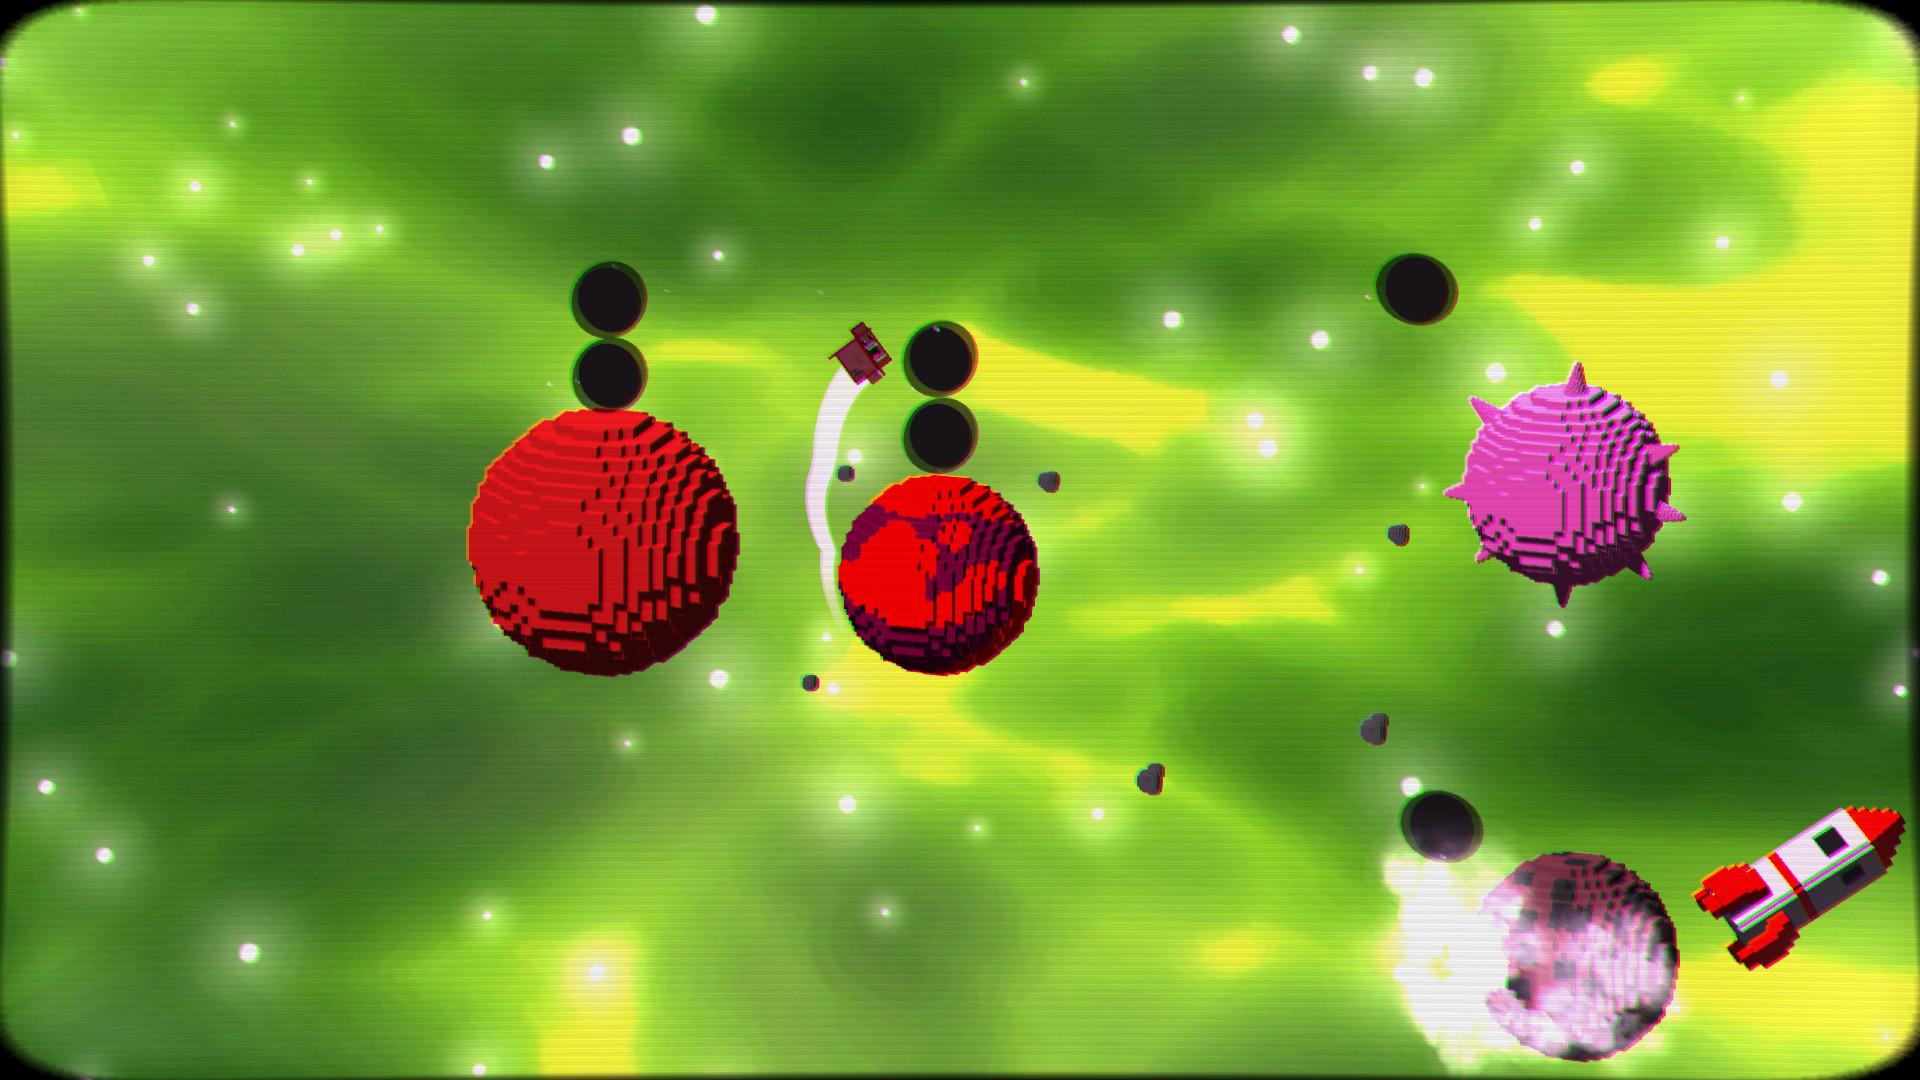 Screenshot №17 from game Cosmic Leap